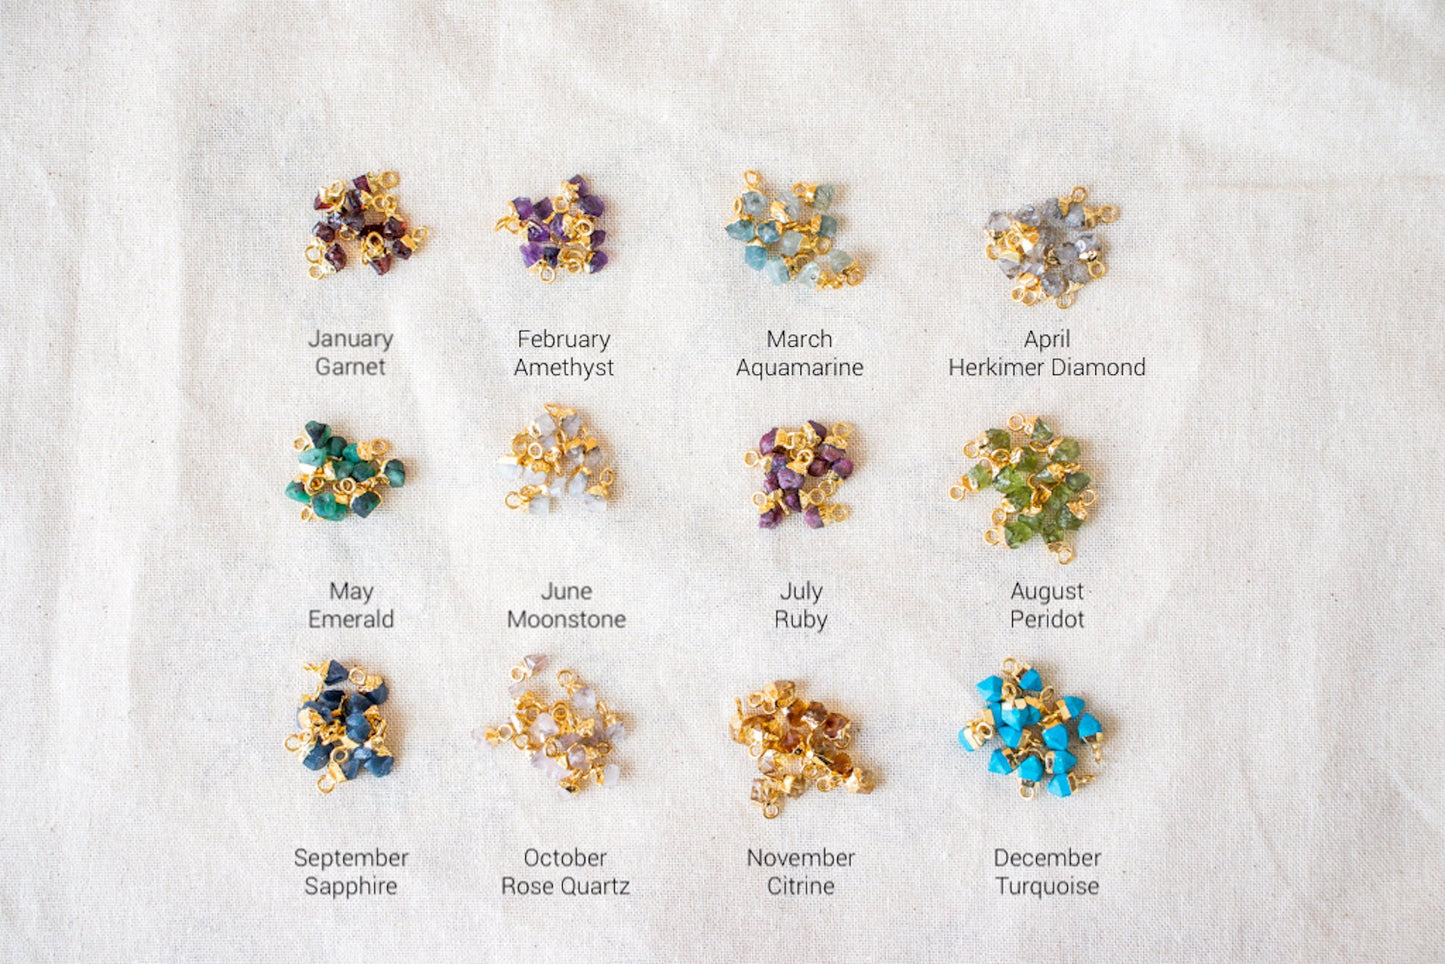 Emery & Opal - Tiny Raw Crystal Necklace